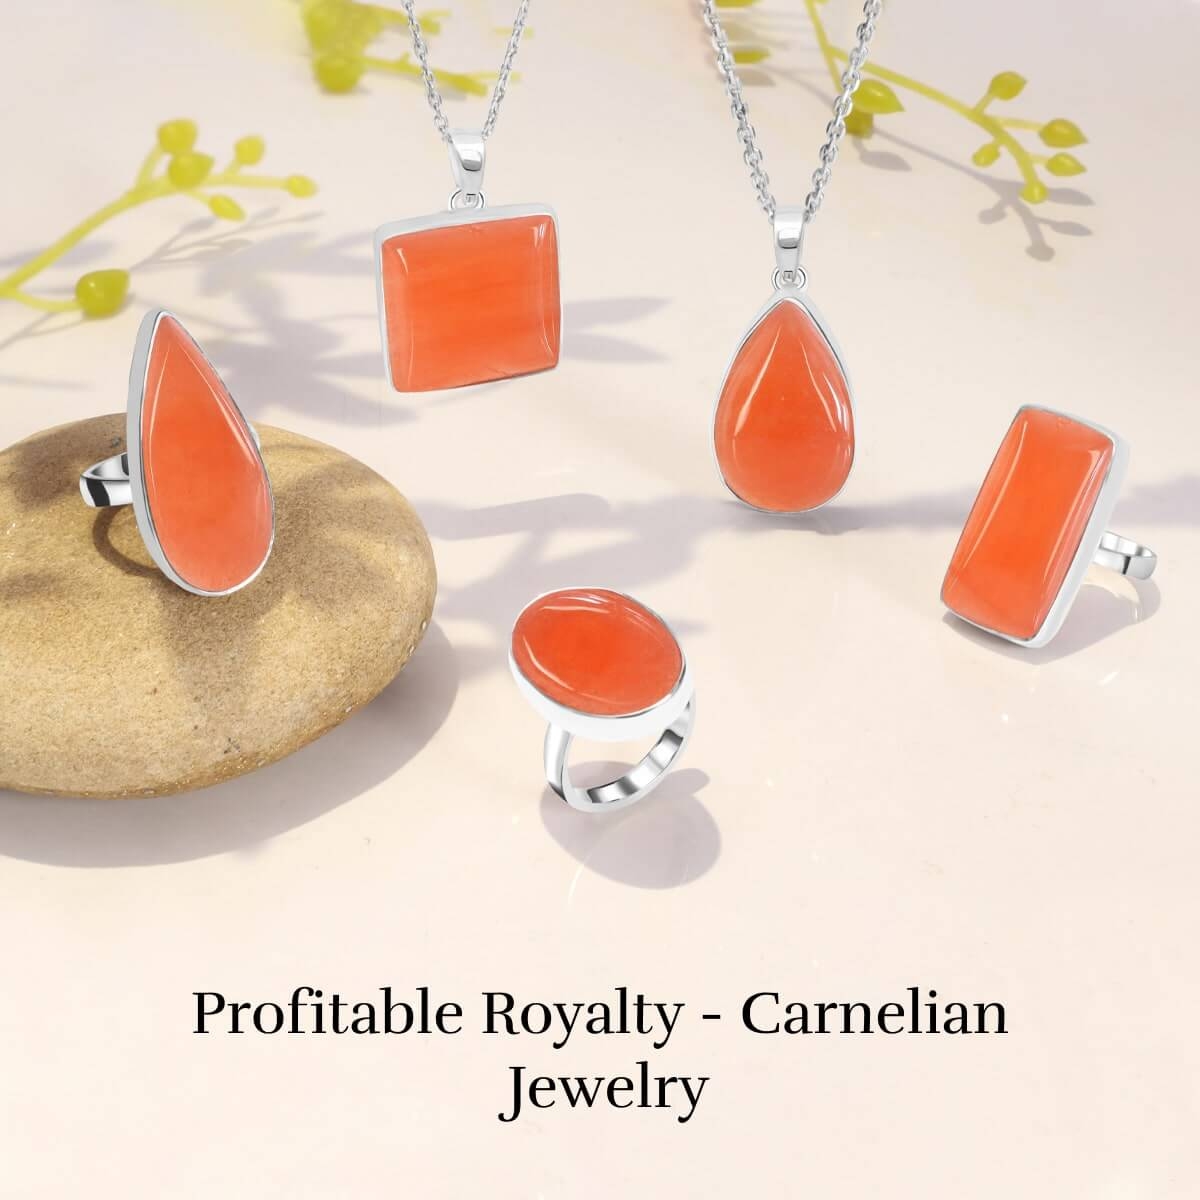 Benefits of Carnelian Jewelry